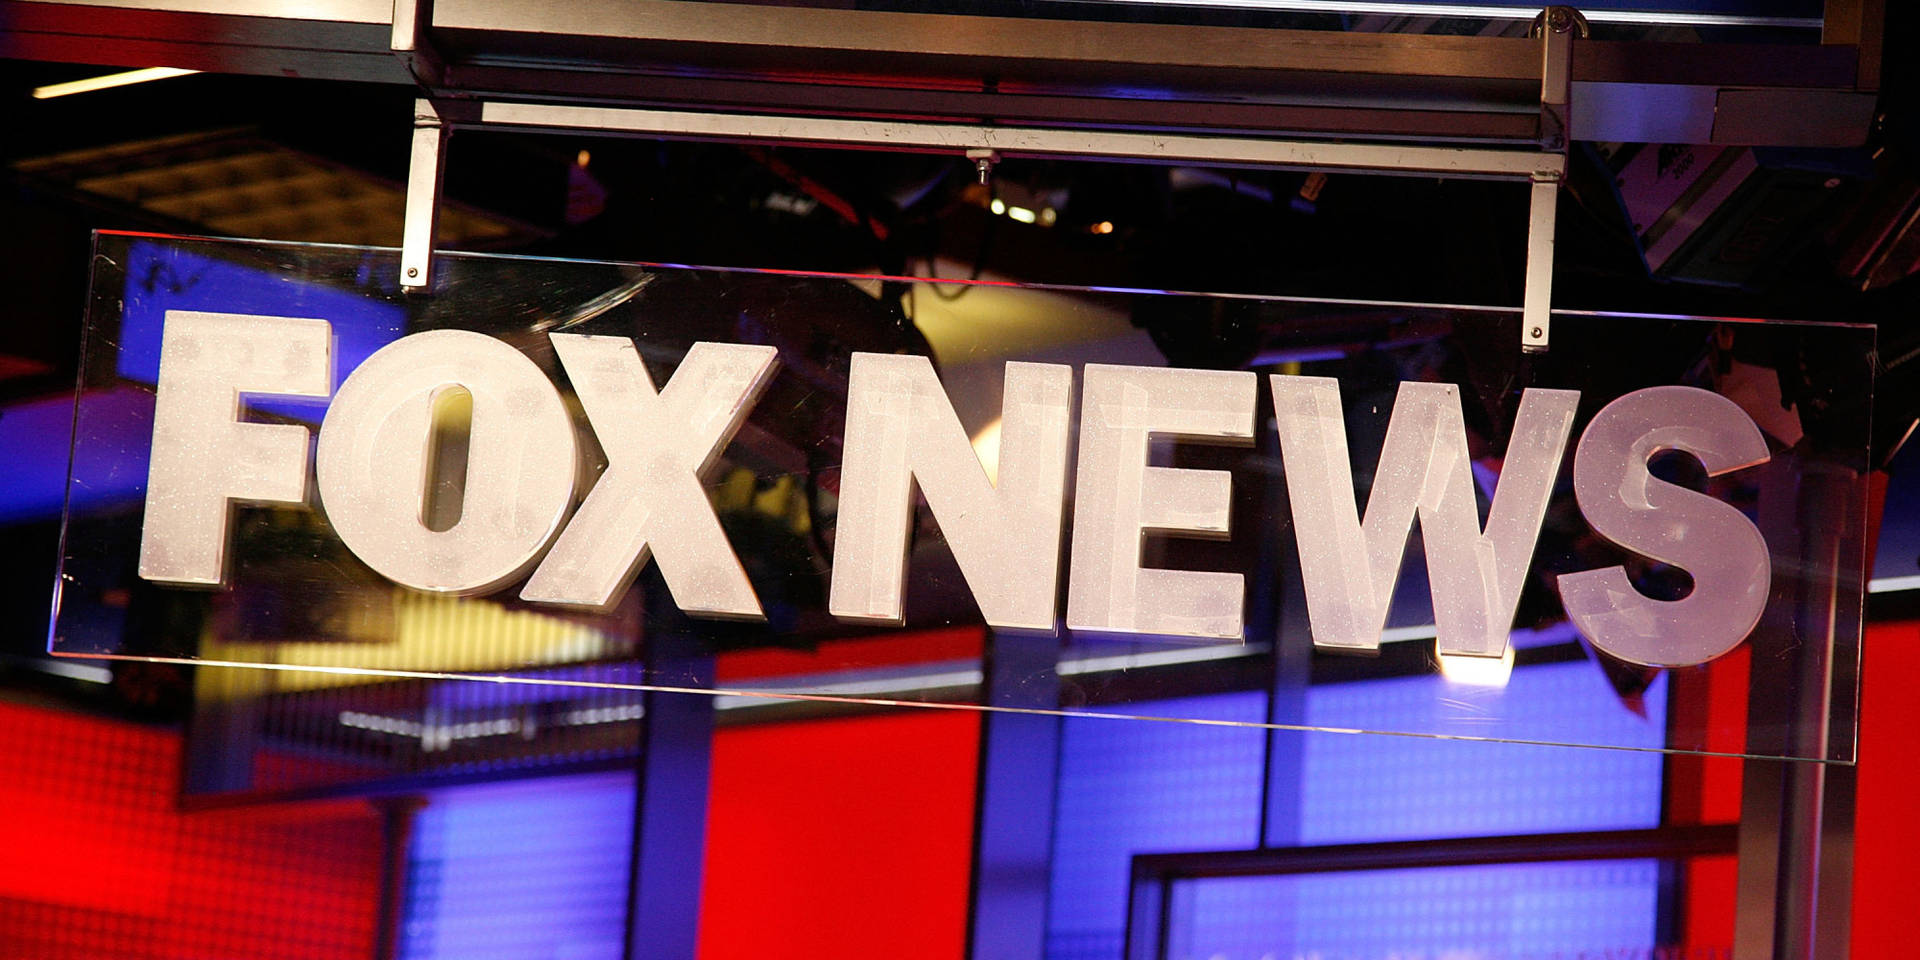 Foxnews Adesivo De Parede Papel de Parede